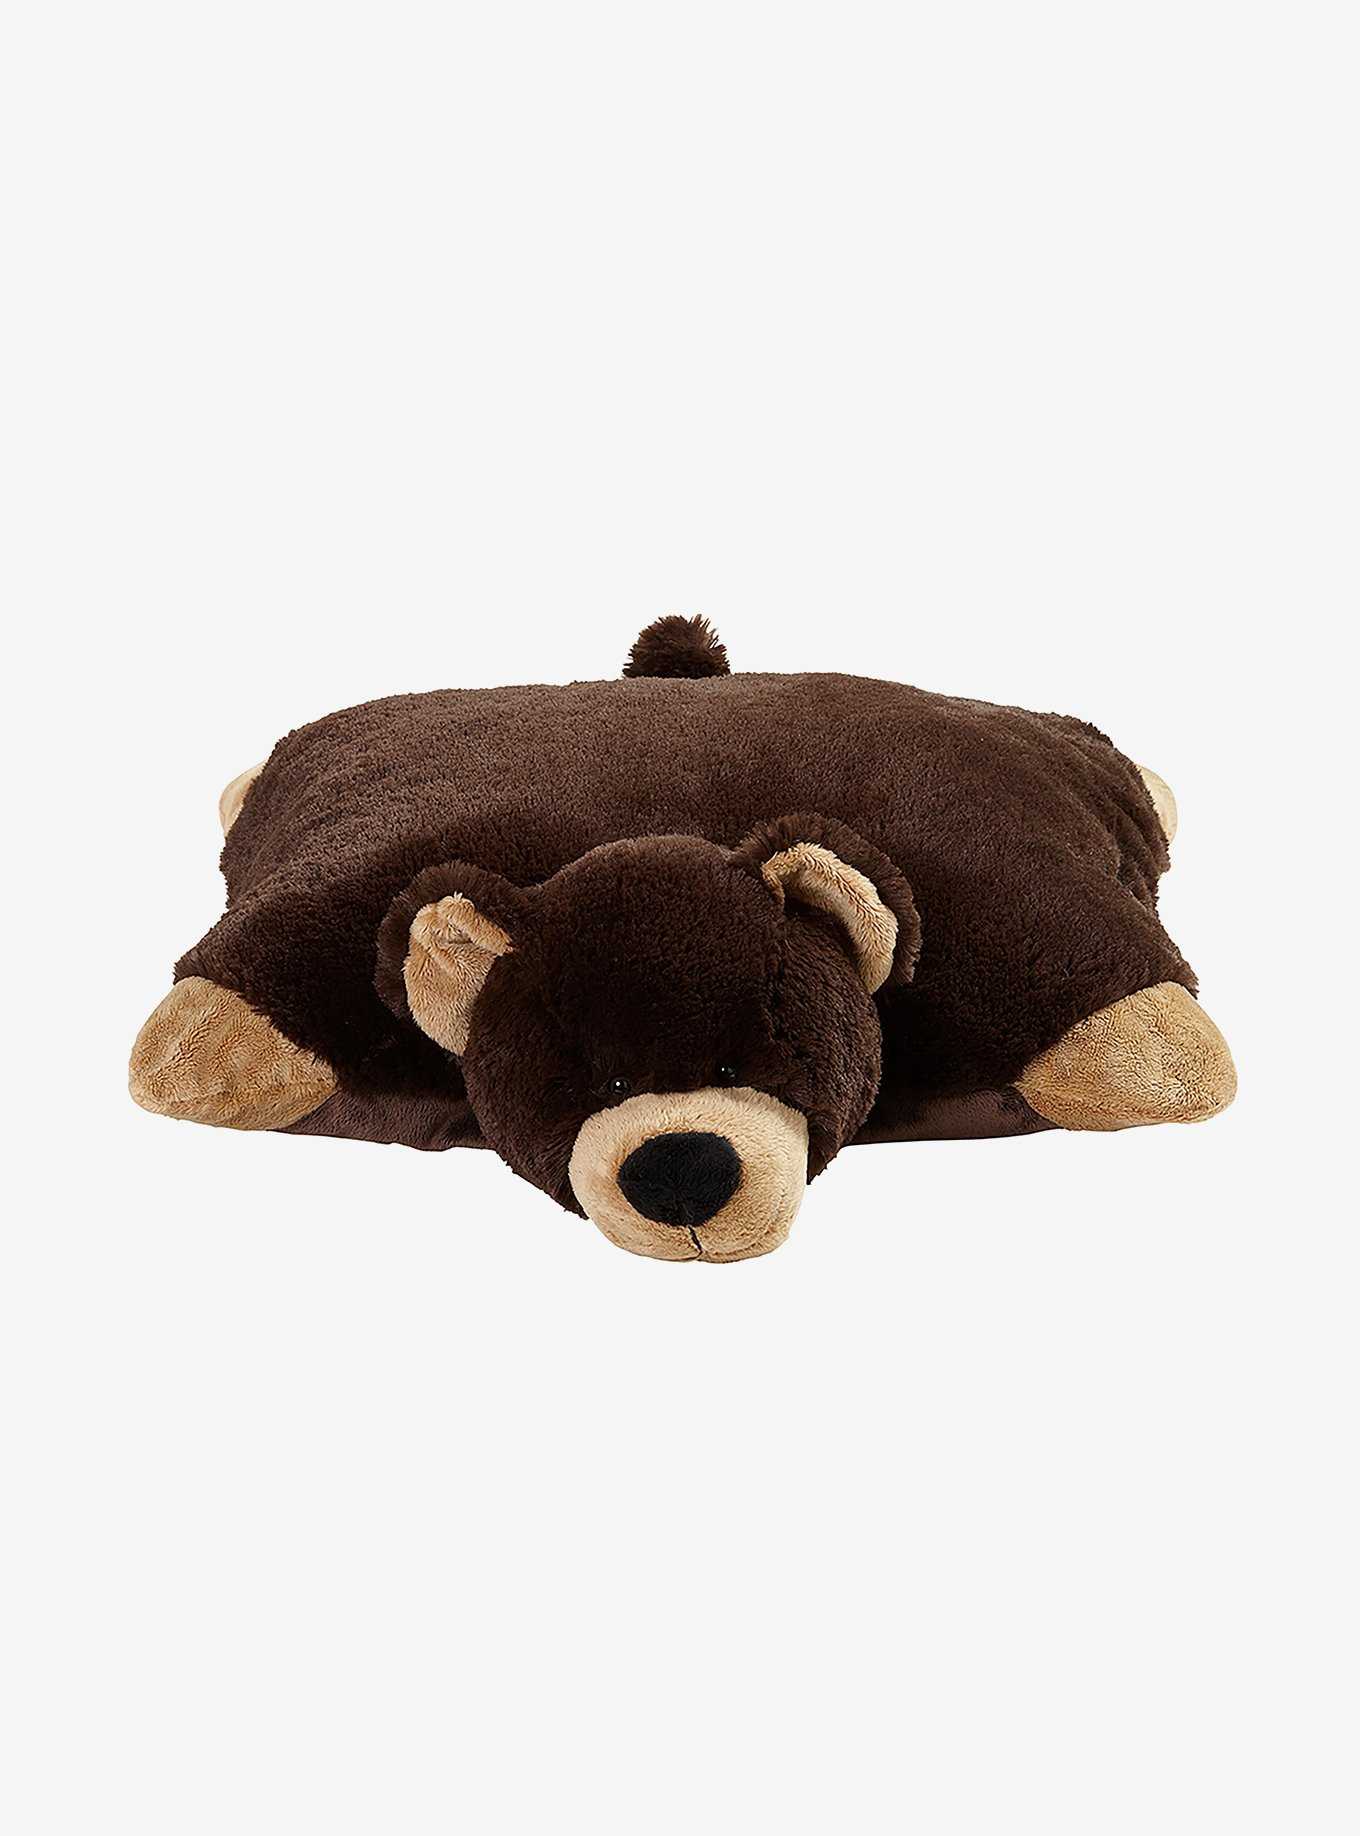 Mr. Bear Pillow Pets Plush Toy, , hi-res